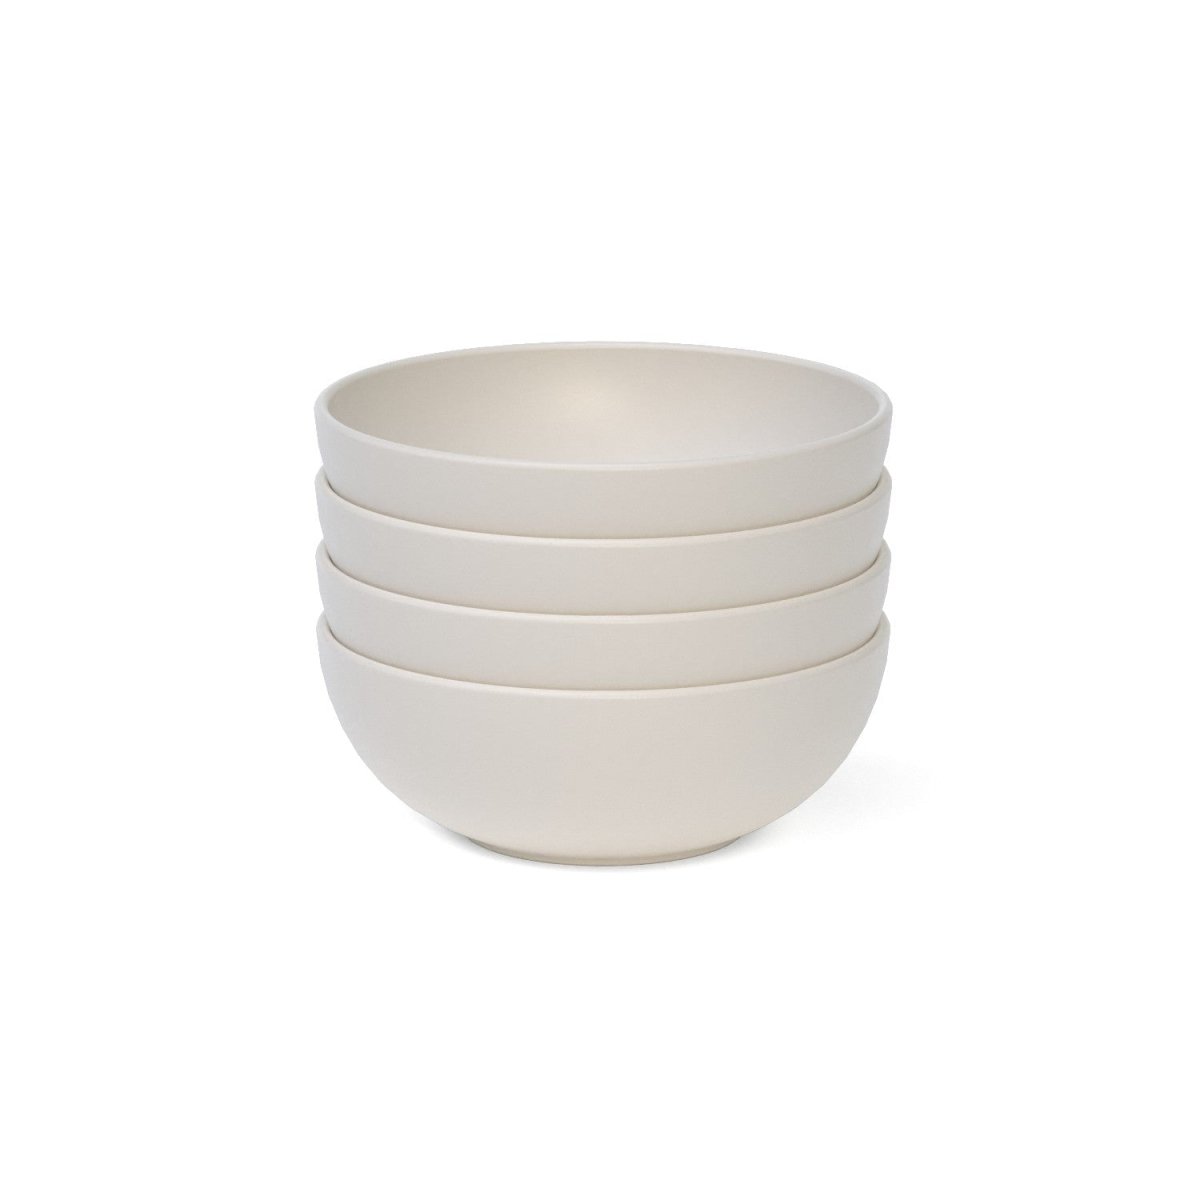 EKOBO 24 oz Round Cereal Bowl, Set of 4 - Off White - lily & onyx